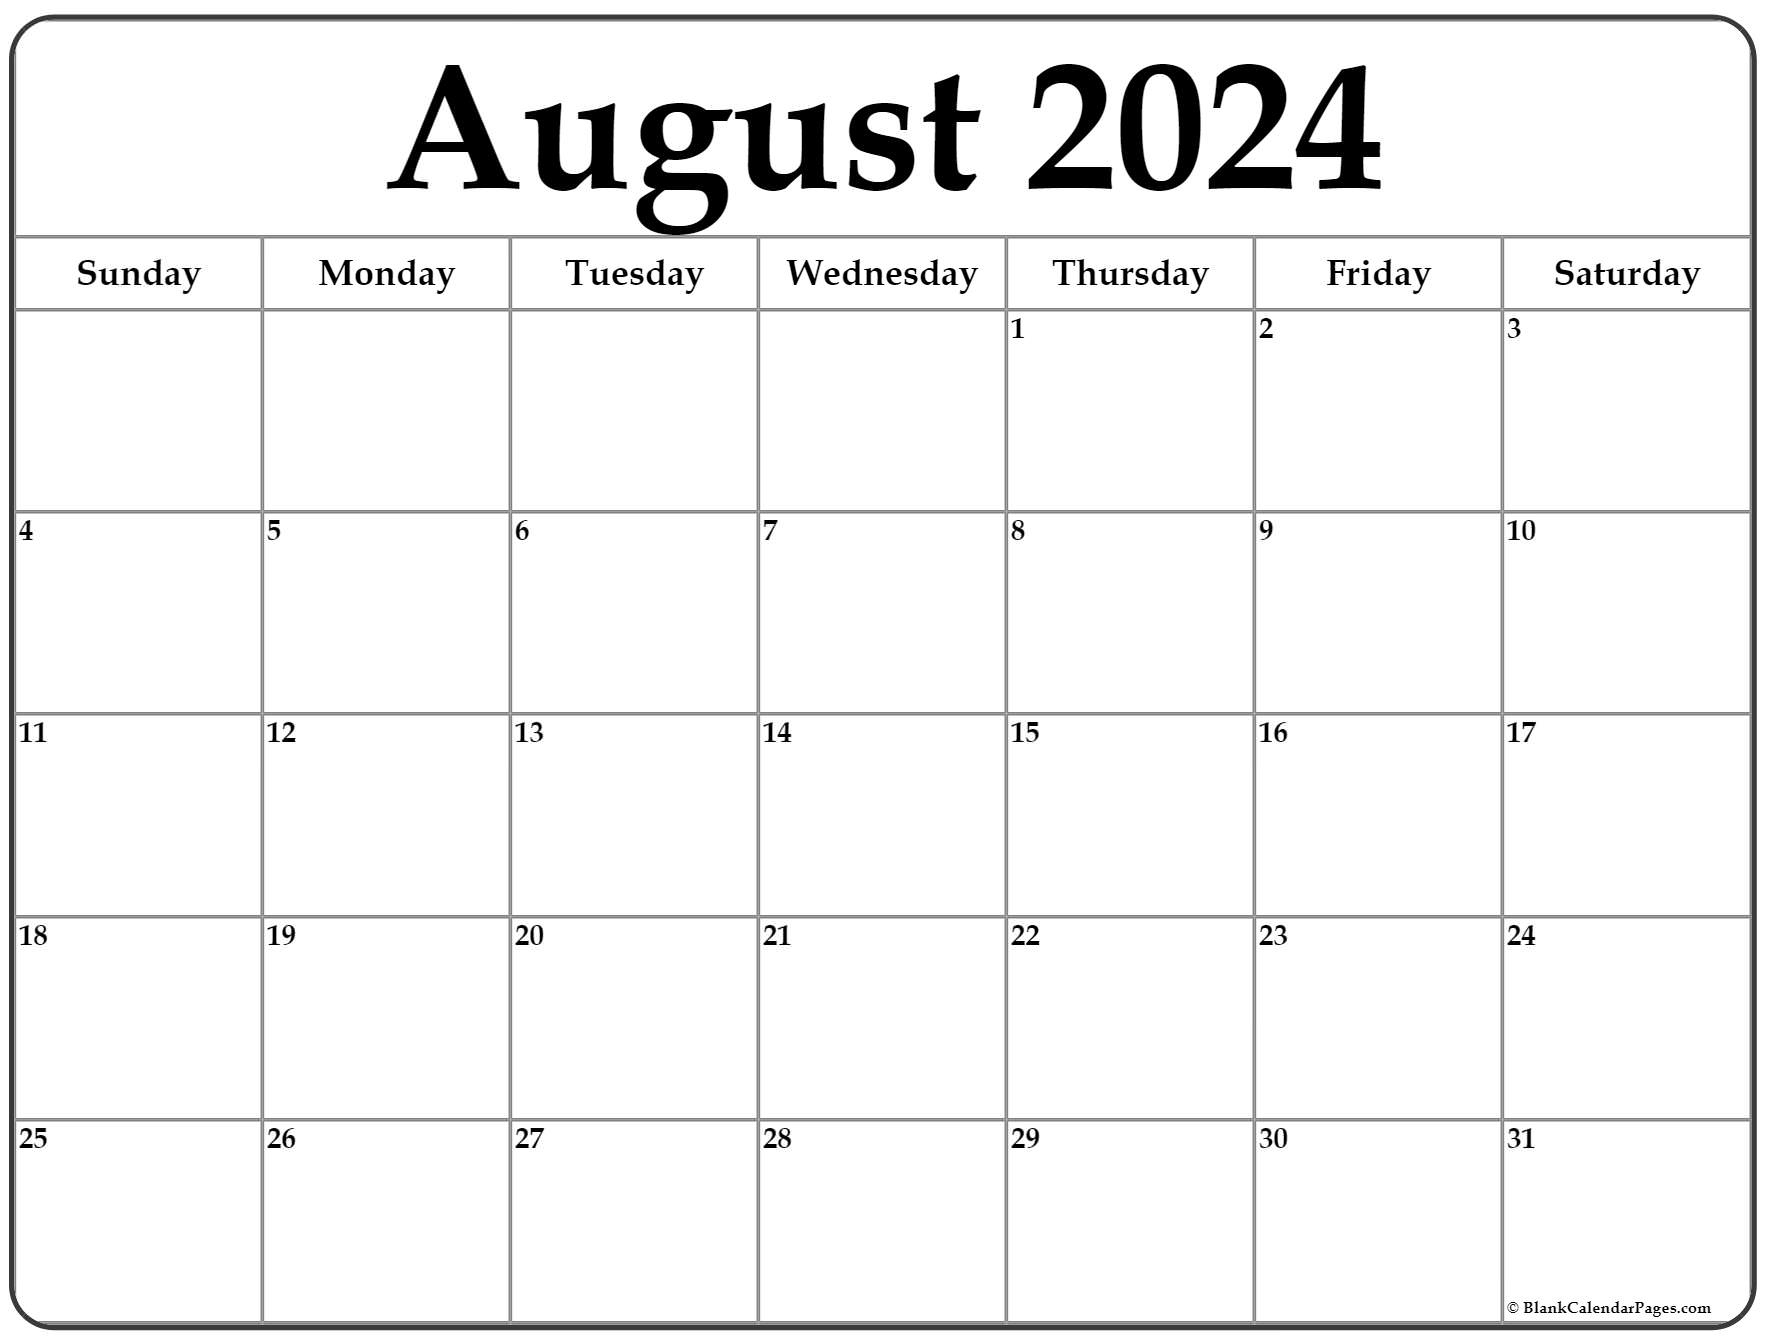 August 2024 Calendar | Free Printable Calendar intended for Free Printable August 2024 Calendar Canada